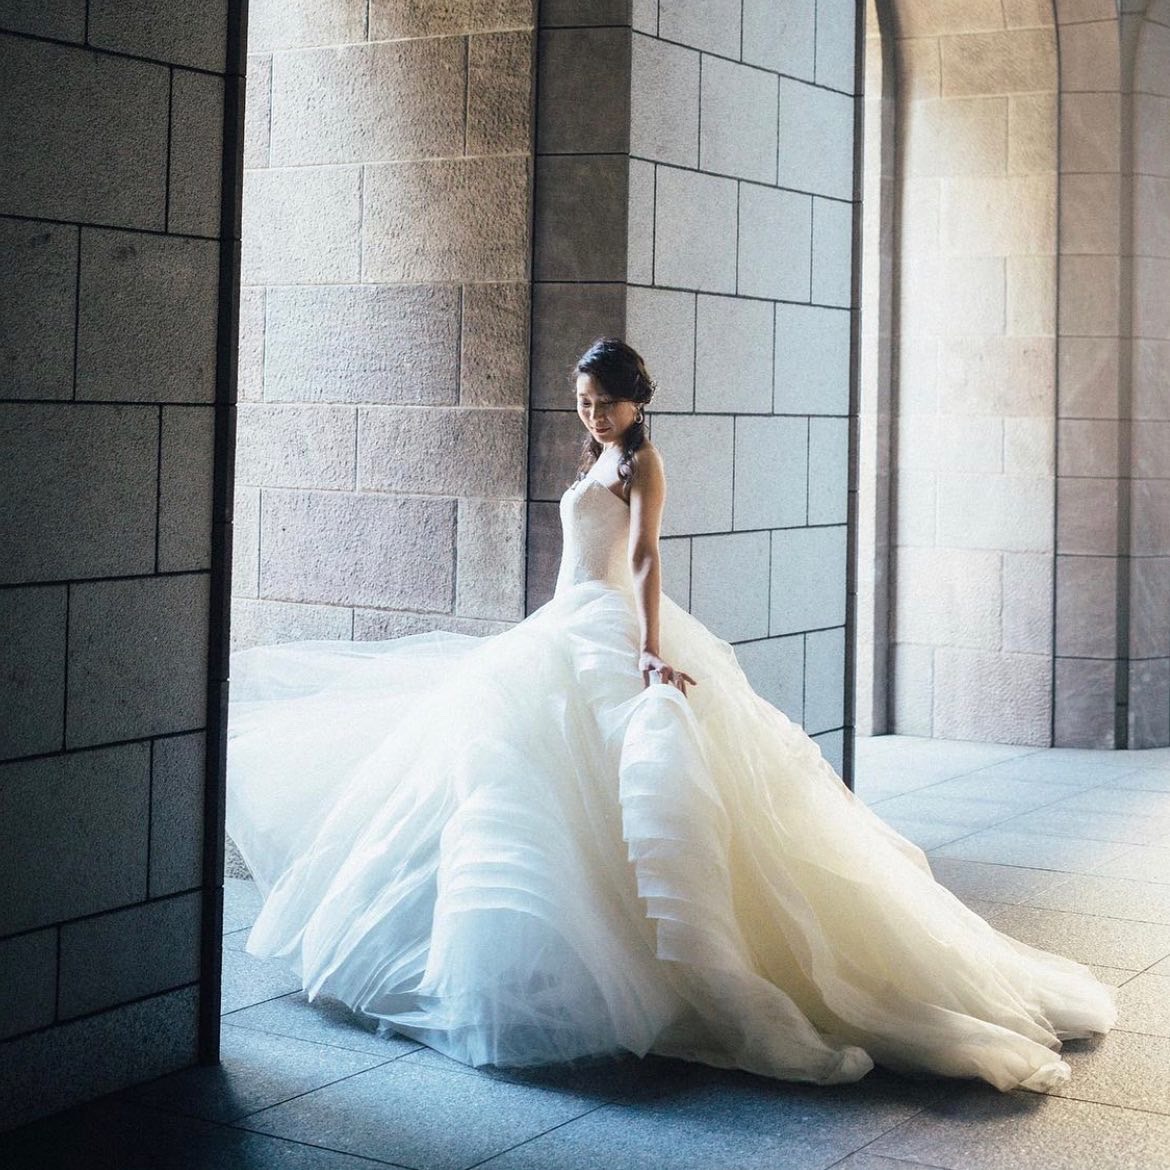 wedding dress（VERAWANG Lara）/ @y.grhy_oyuzuri 様 | wedo〜TSUNAGU〜